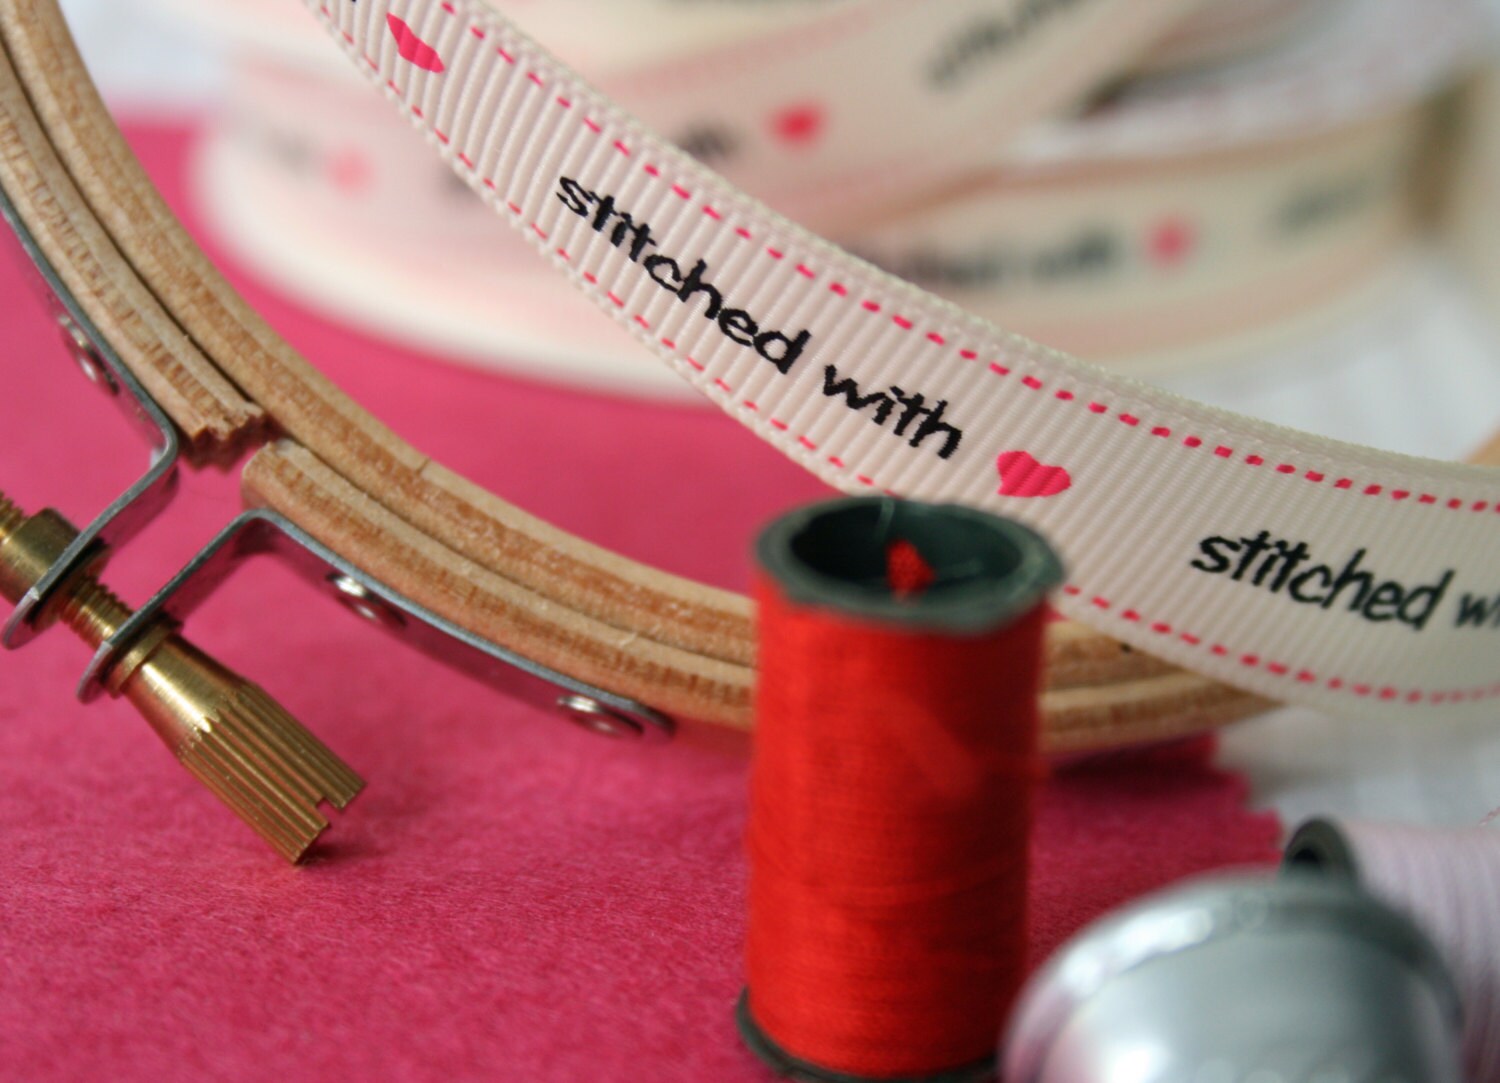 Vintage Love, Ribbon collection. – StitchKits Crafts